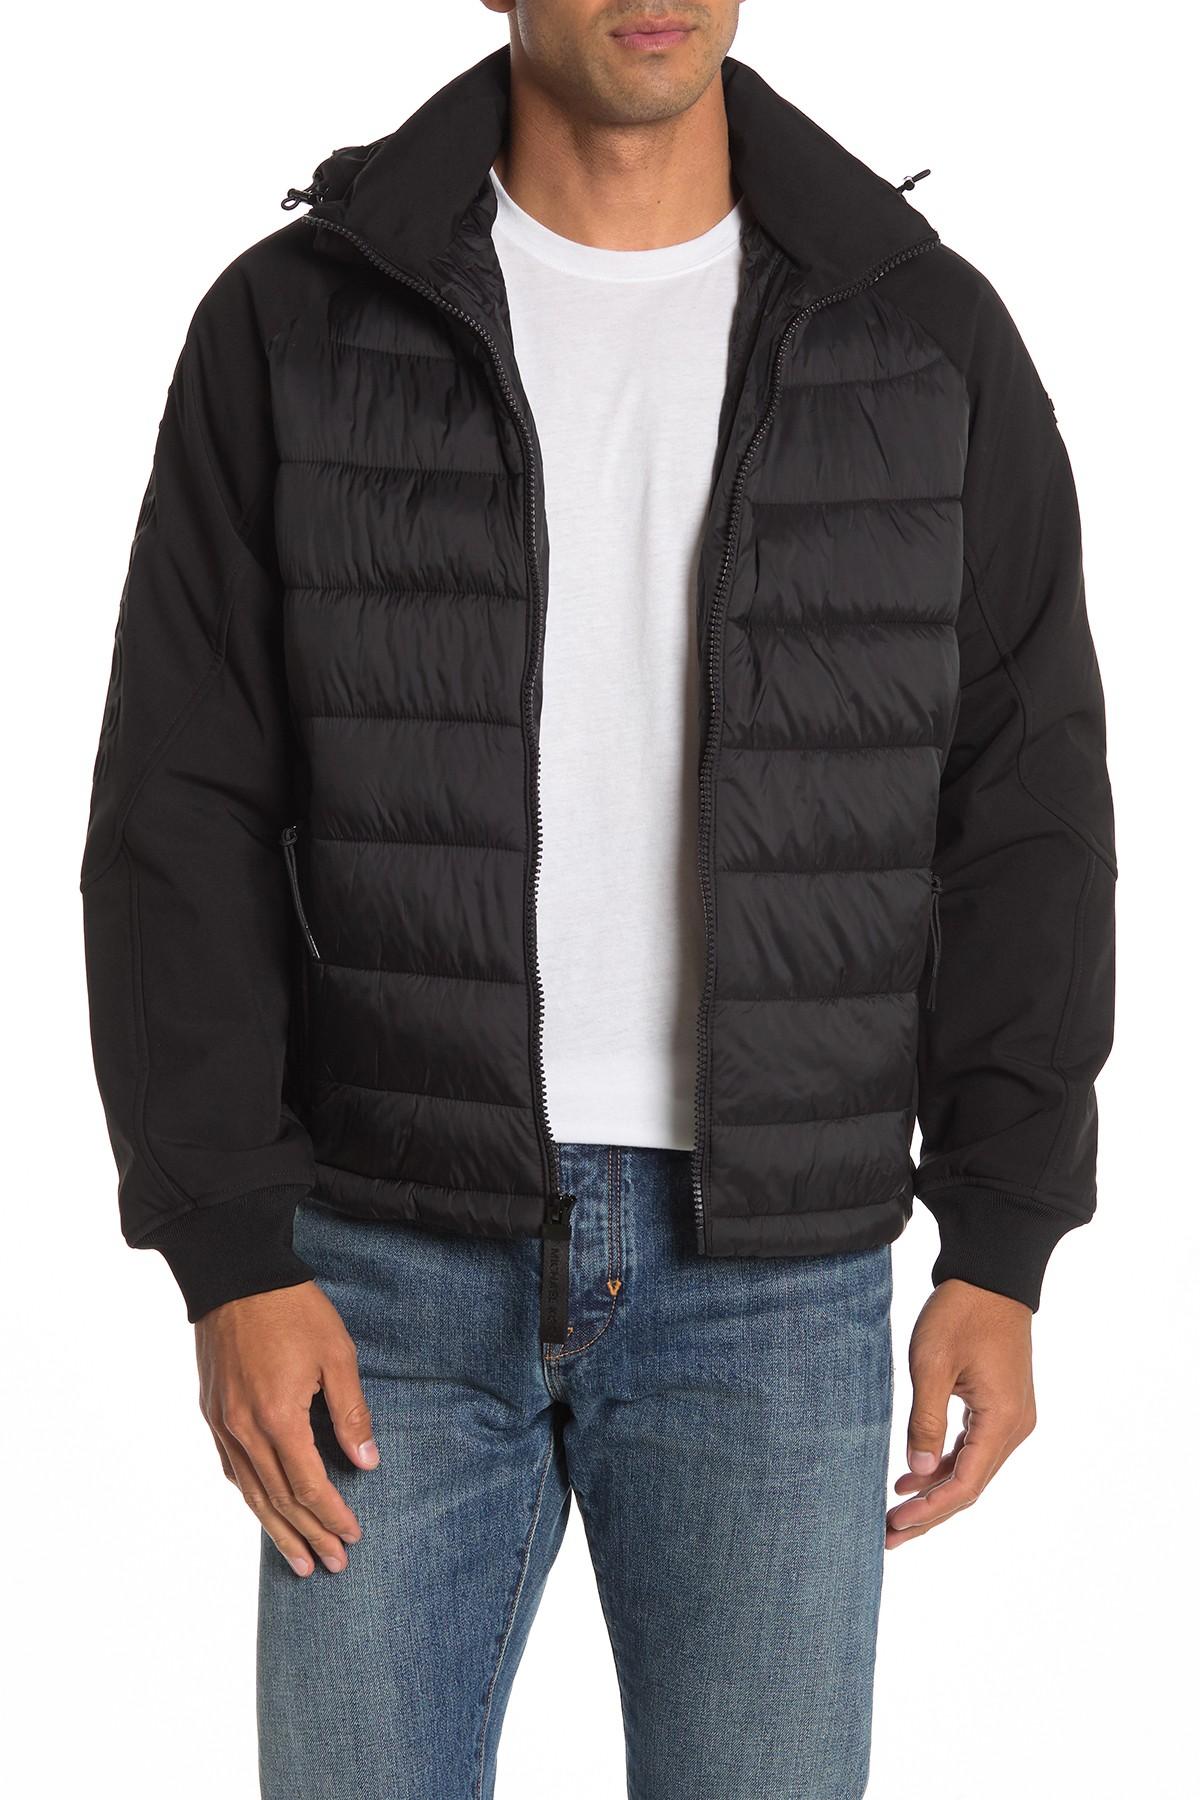 Michael Kors Synthetic Monroe 27 Zip Front Hooded Puffer Jacket in ...